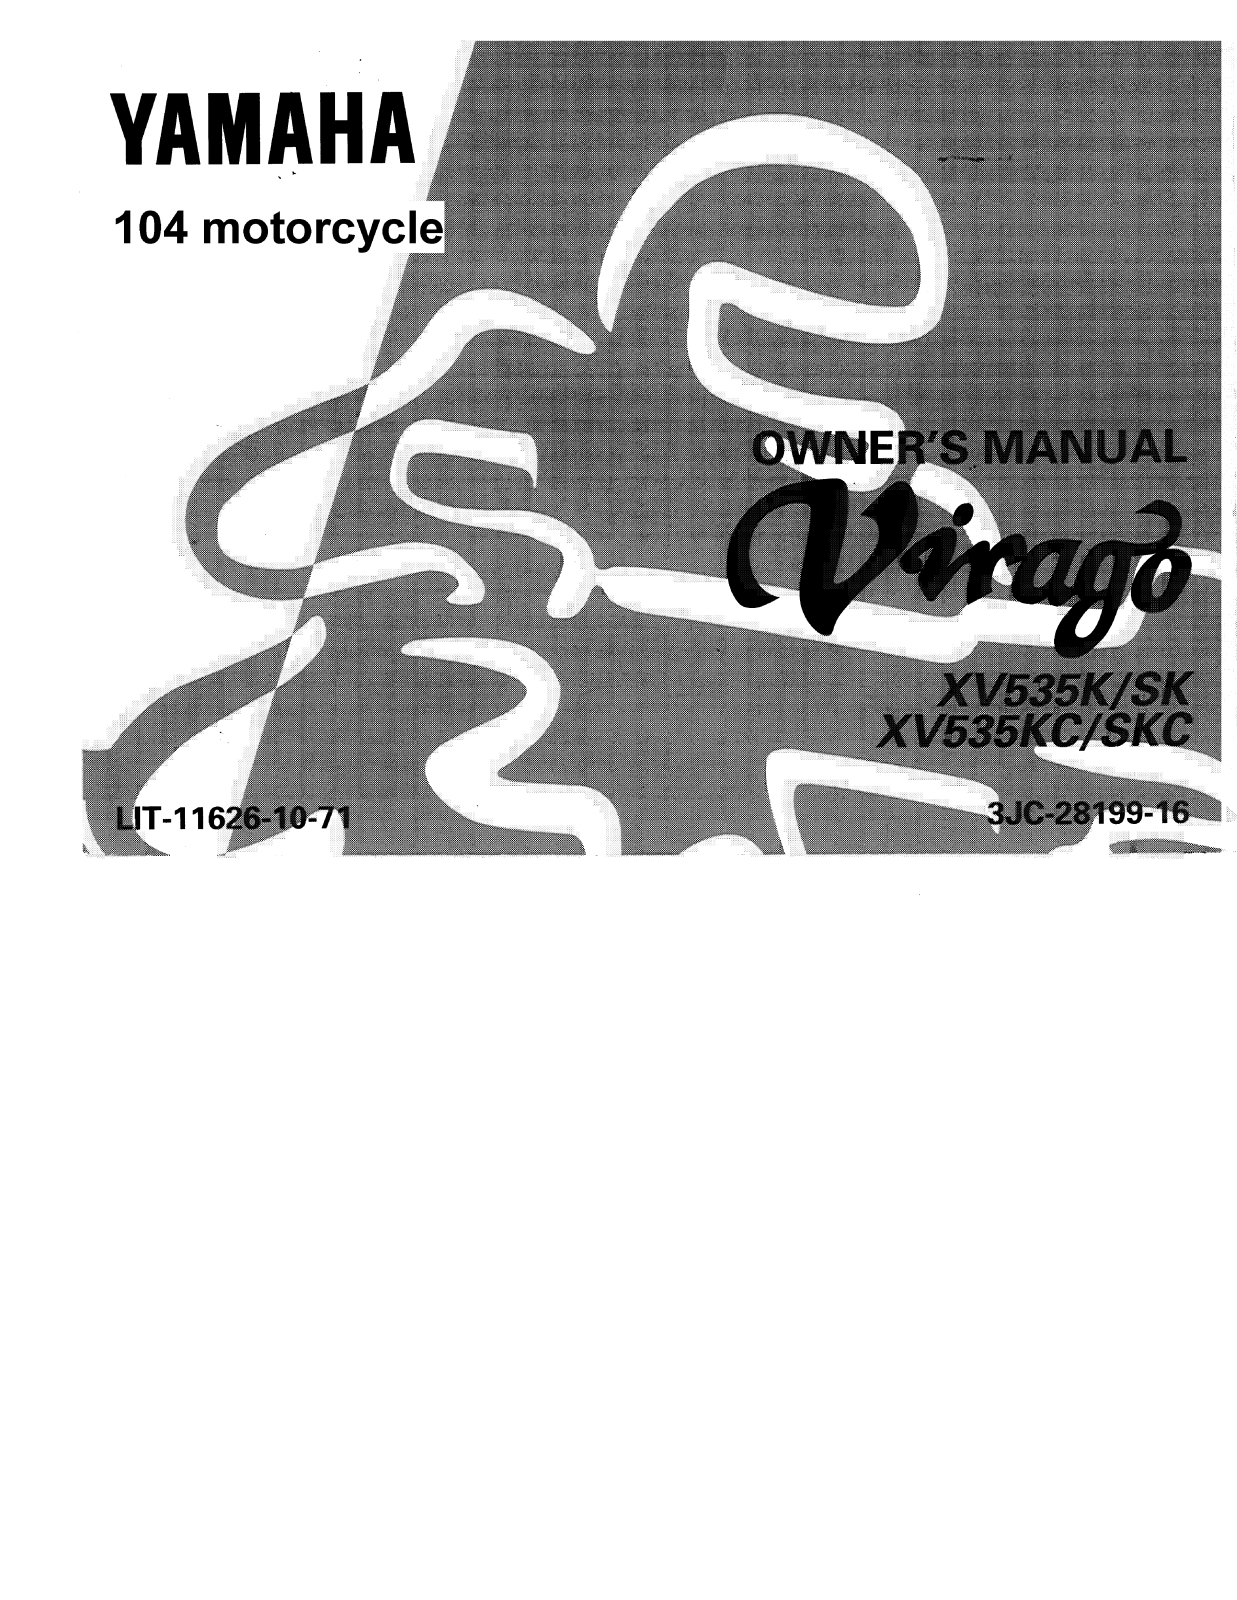 Yamaha VIRAGO 535 Manual